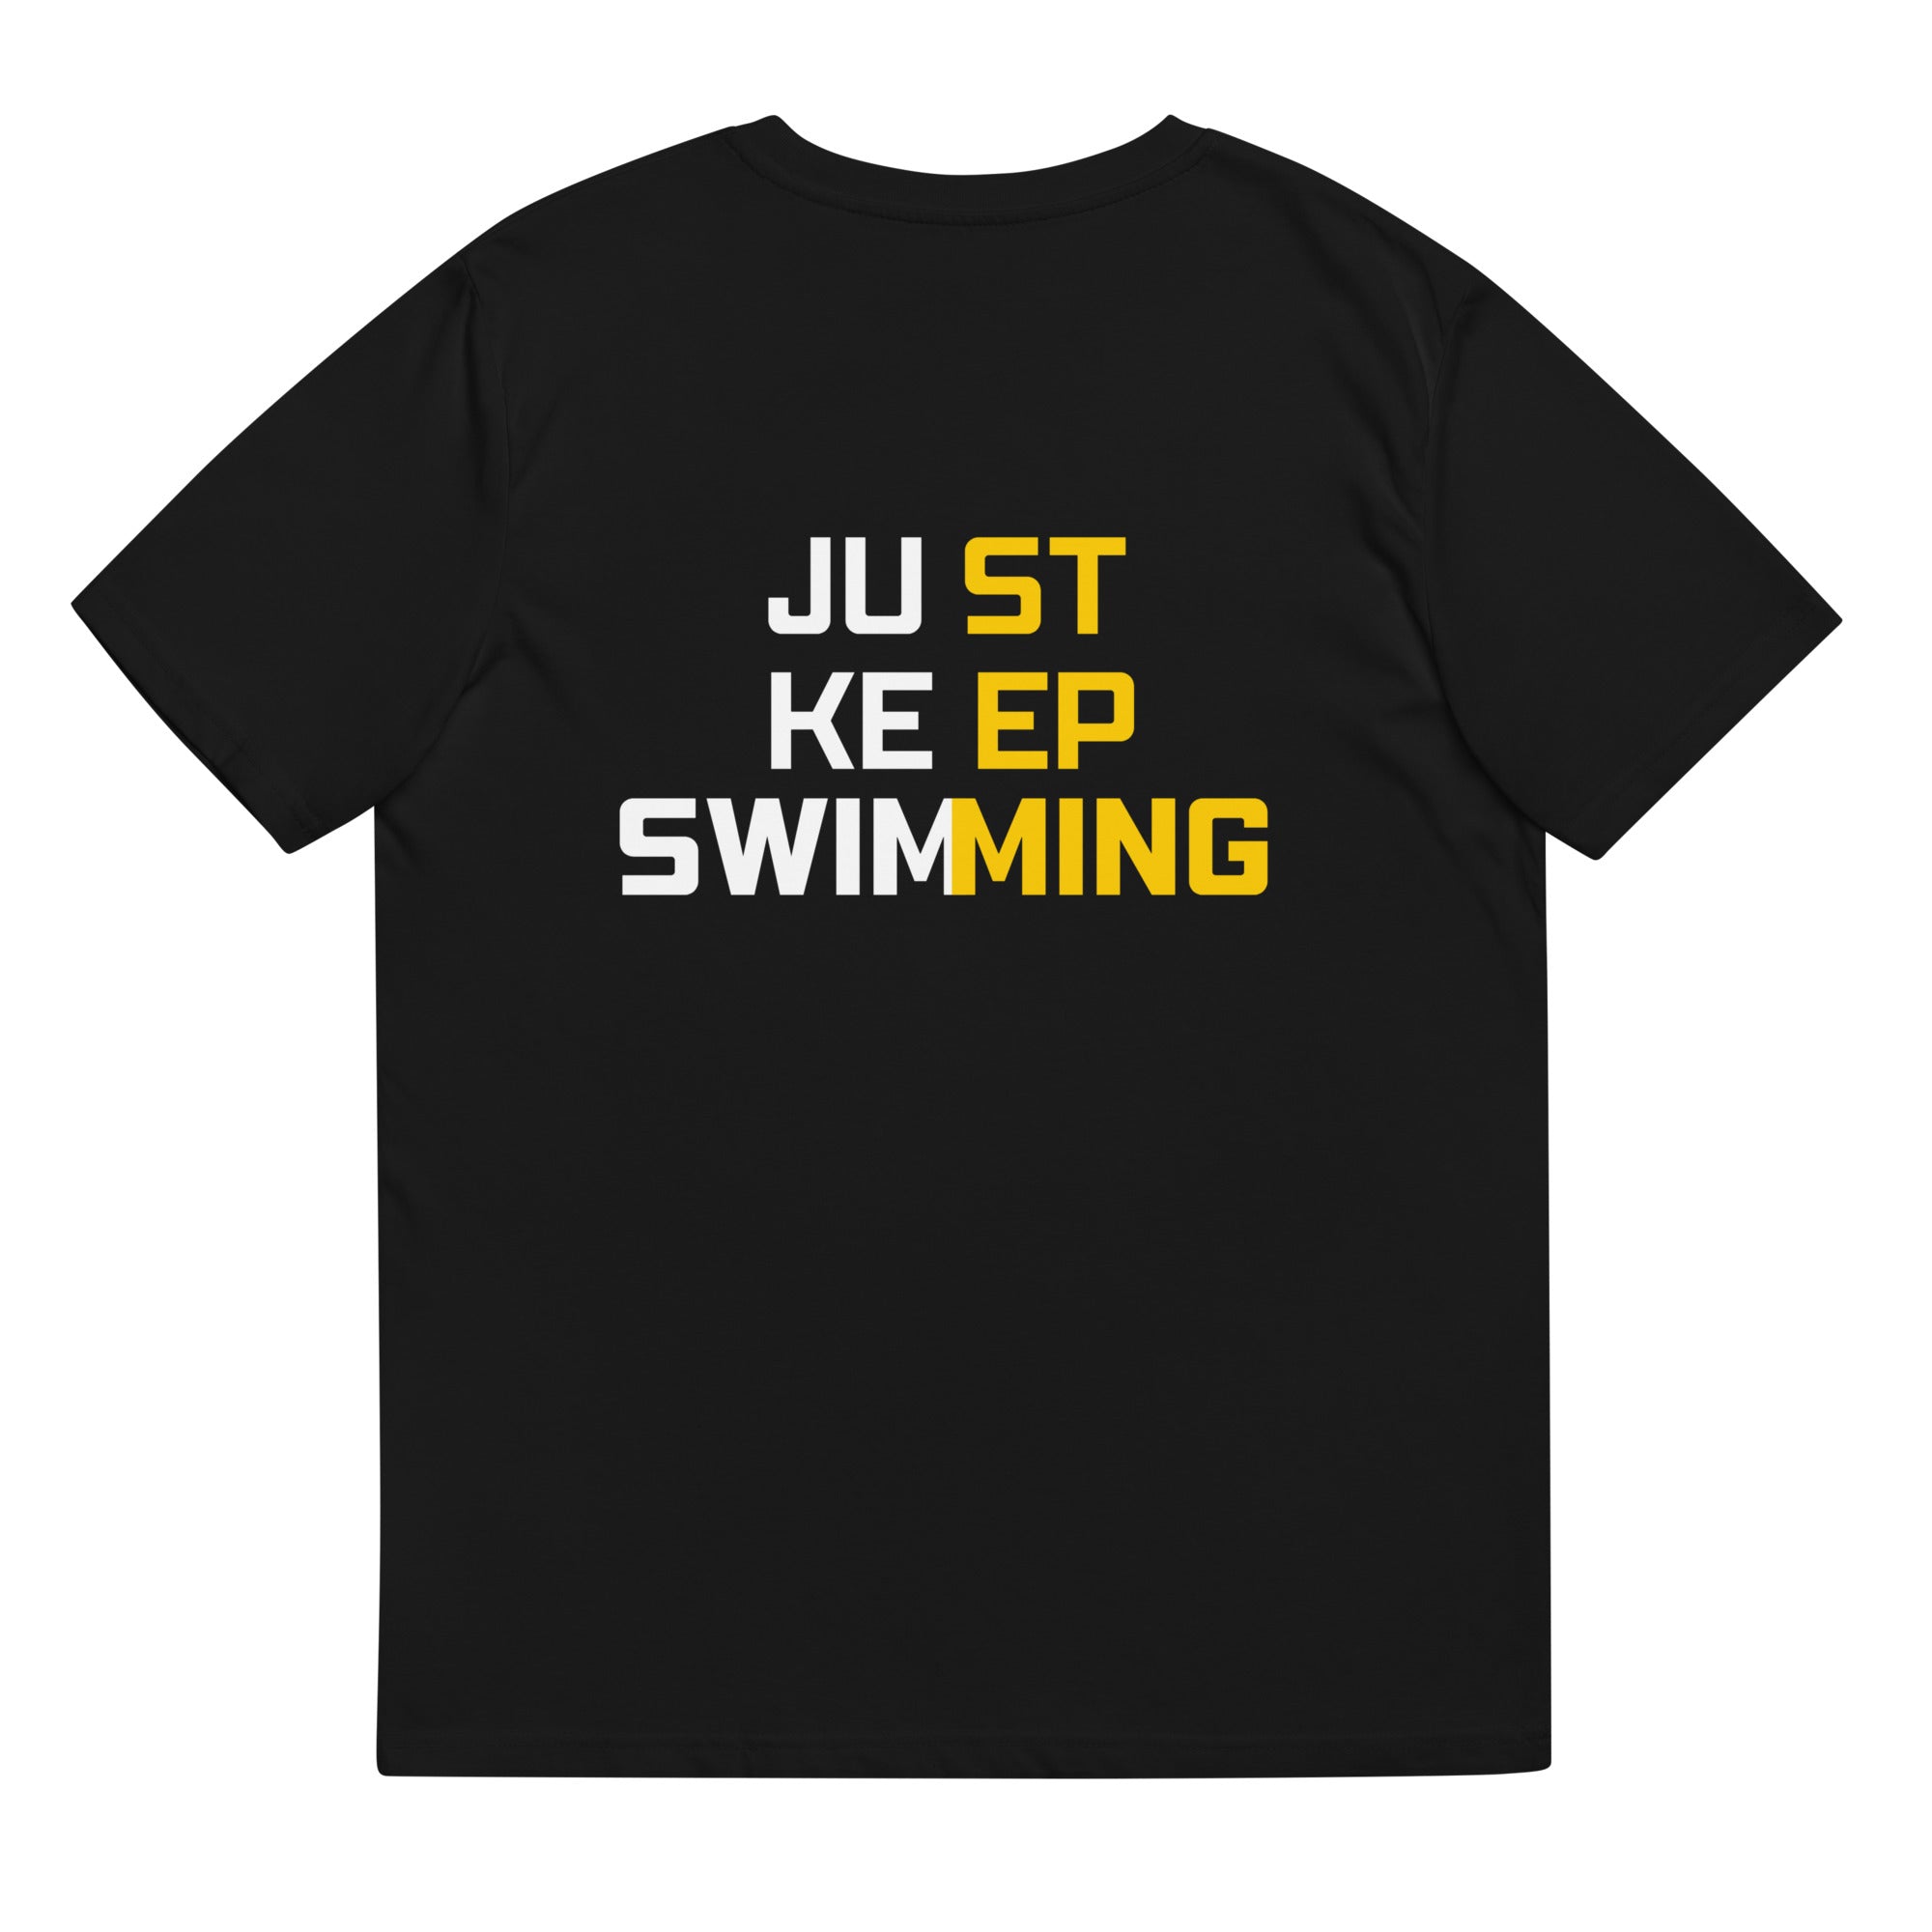 Just Keep Swimming - Unisex organic cotton t-shirt